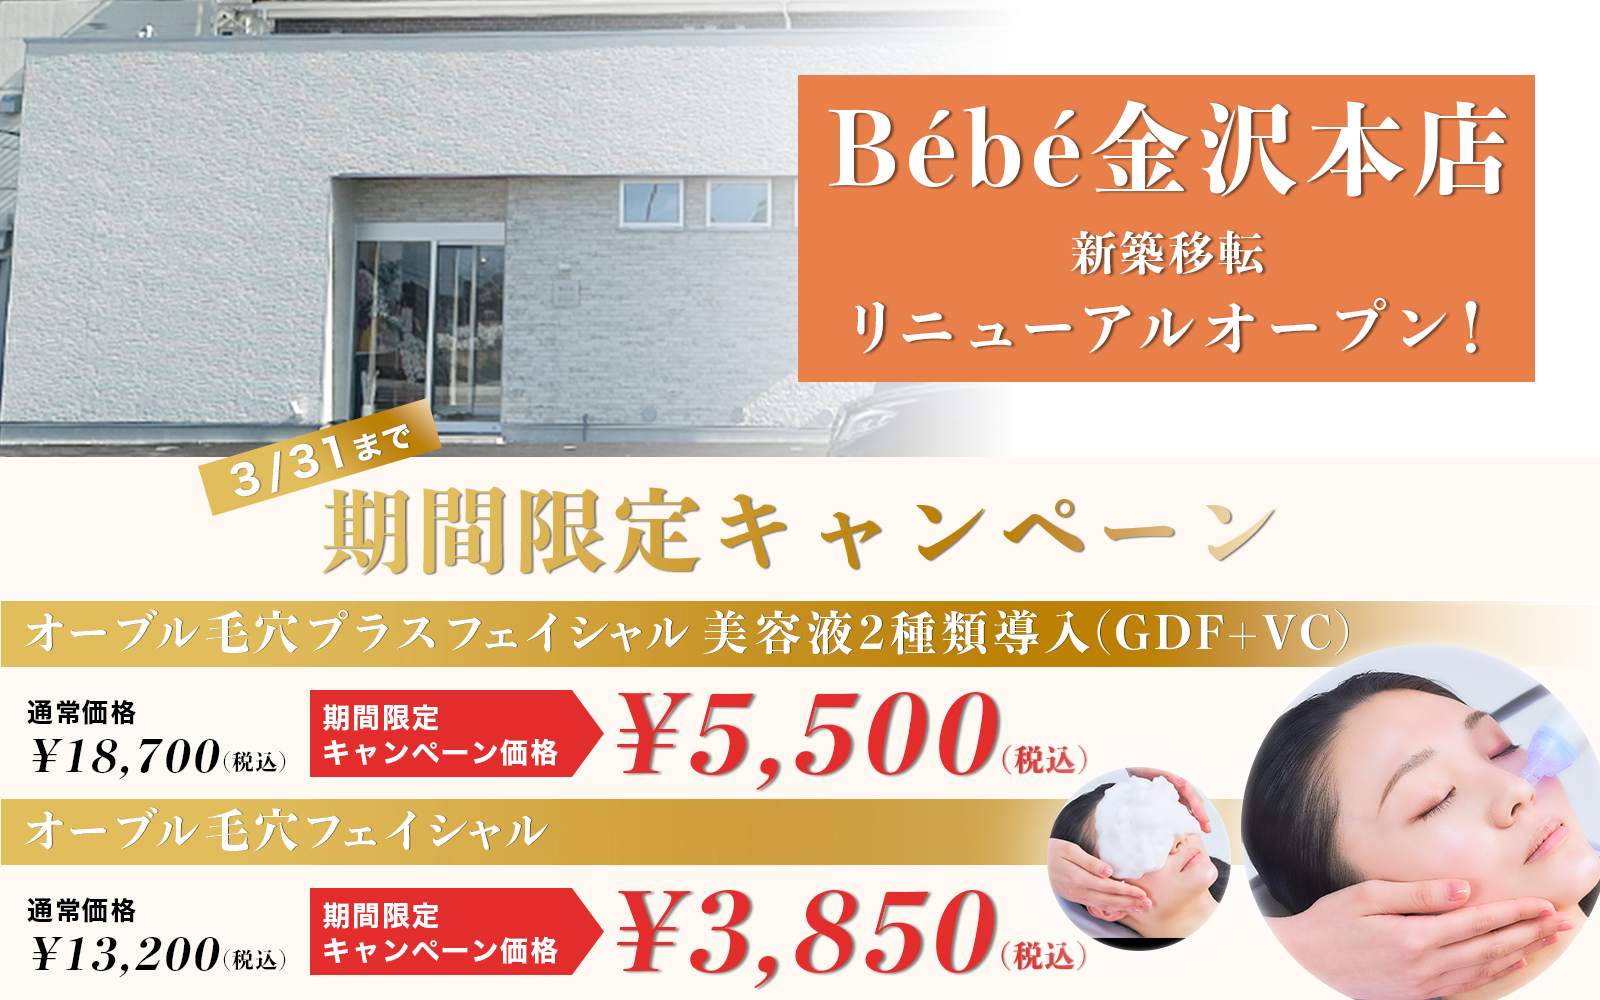 Bébé金沢本店キャンペーン